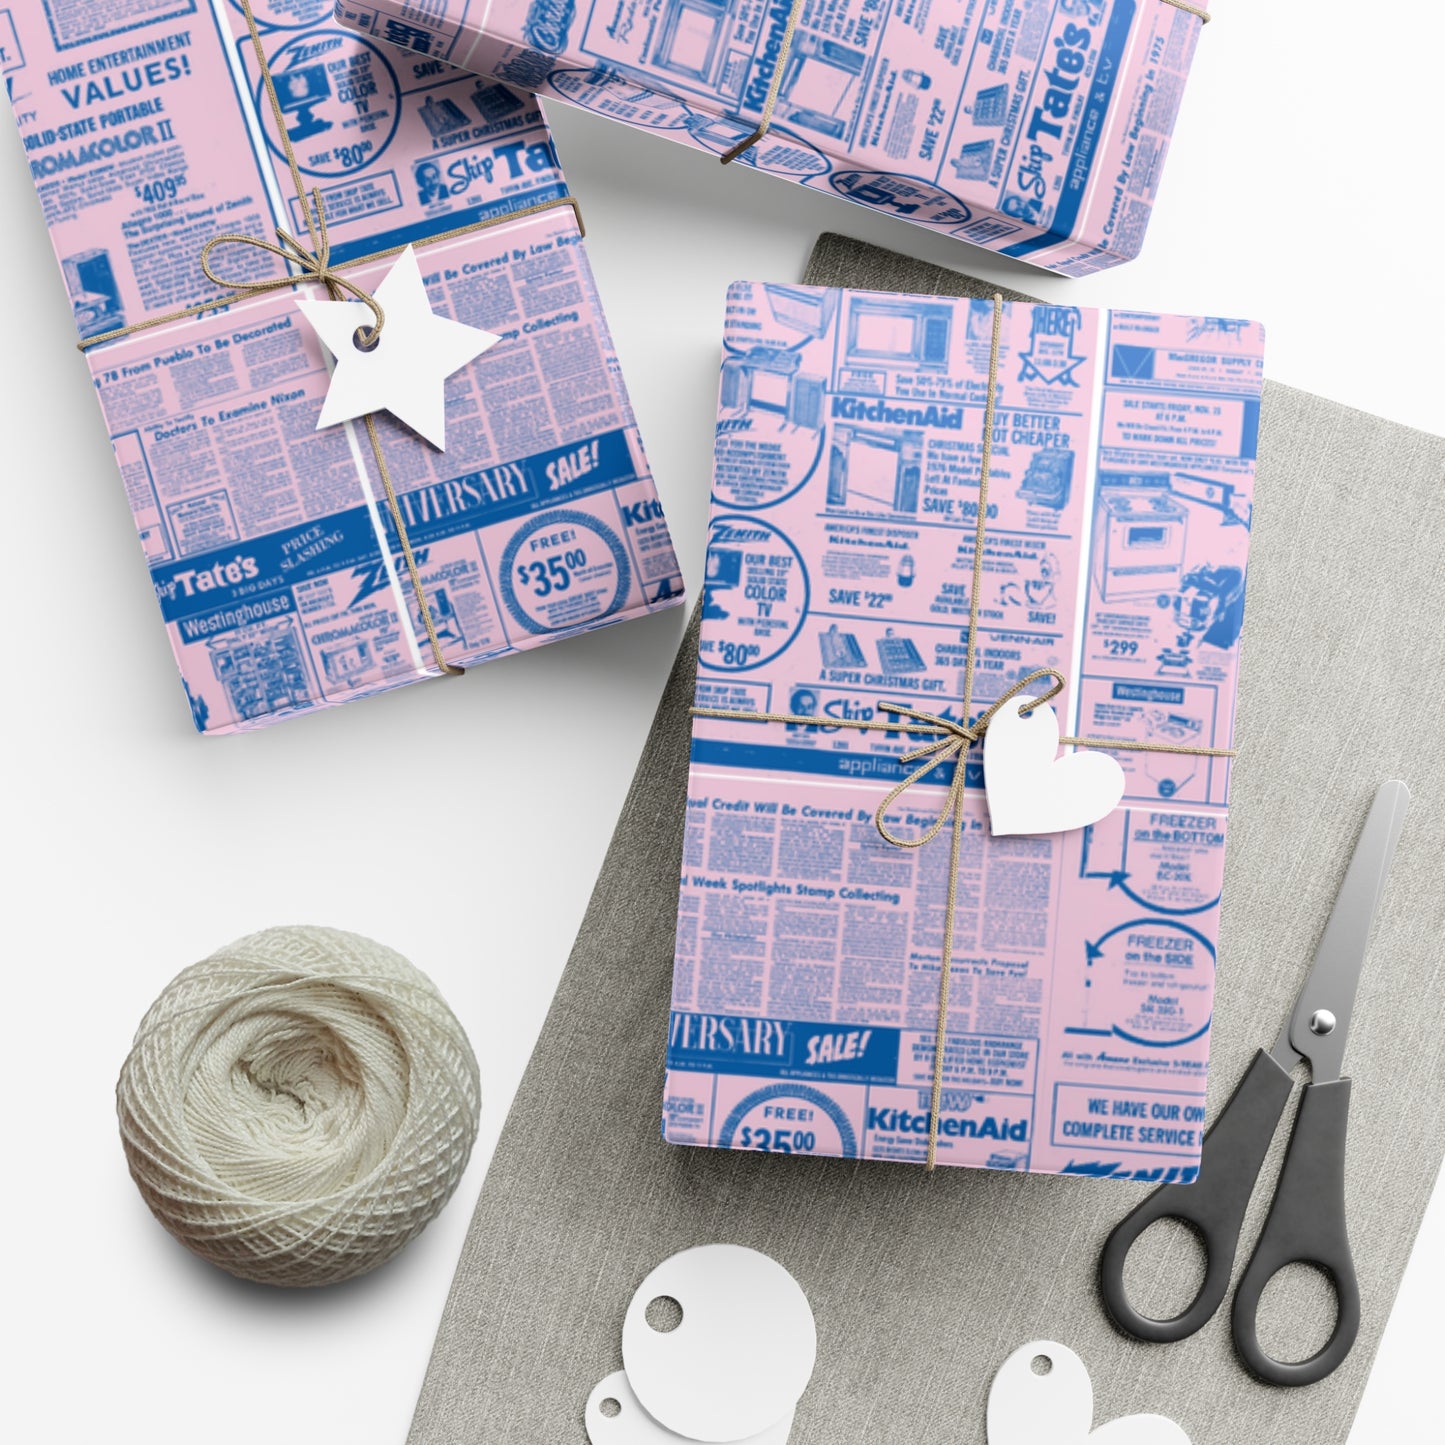 Skip Tate’s Appliances Sales Gift Wrap Lavender colorway